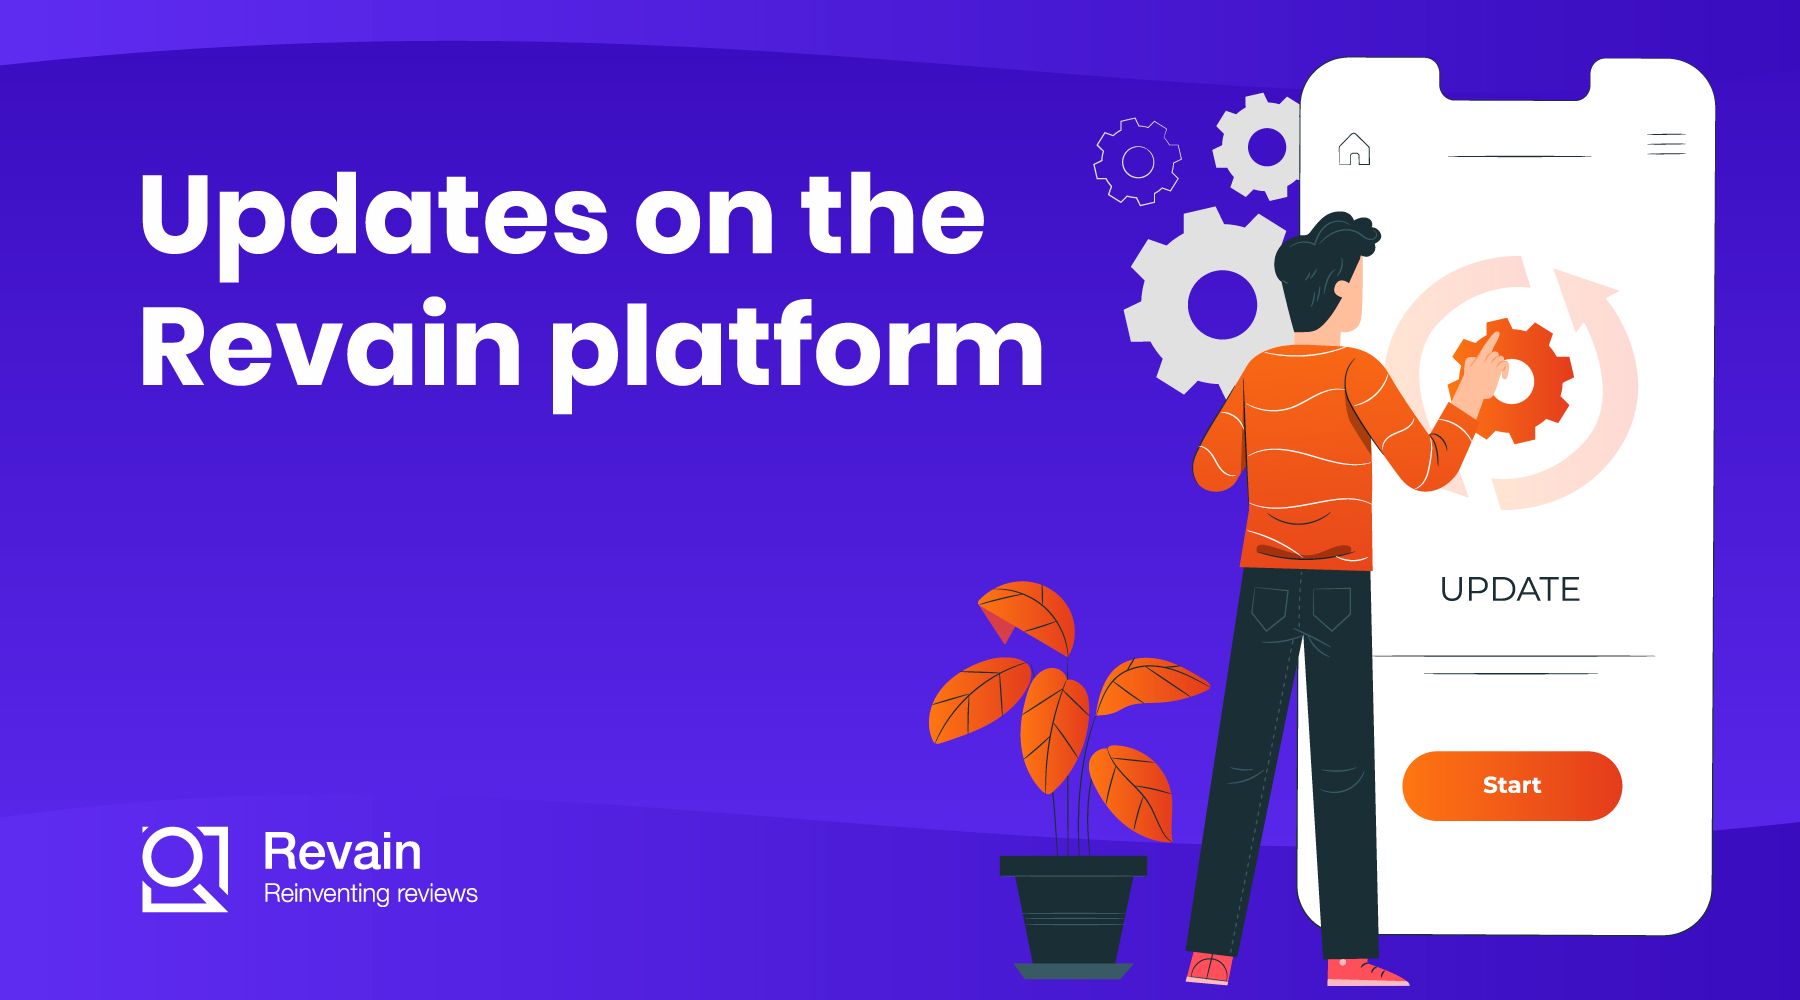 Updates on the Revain platform!